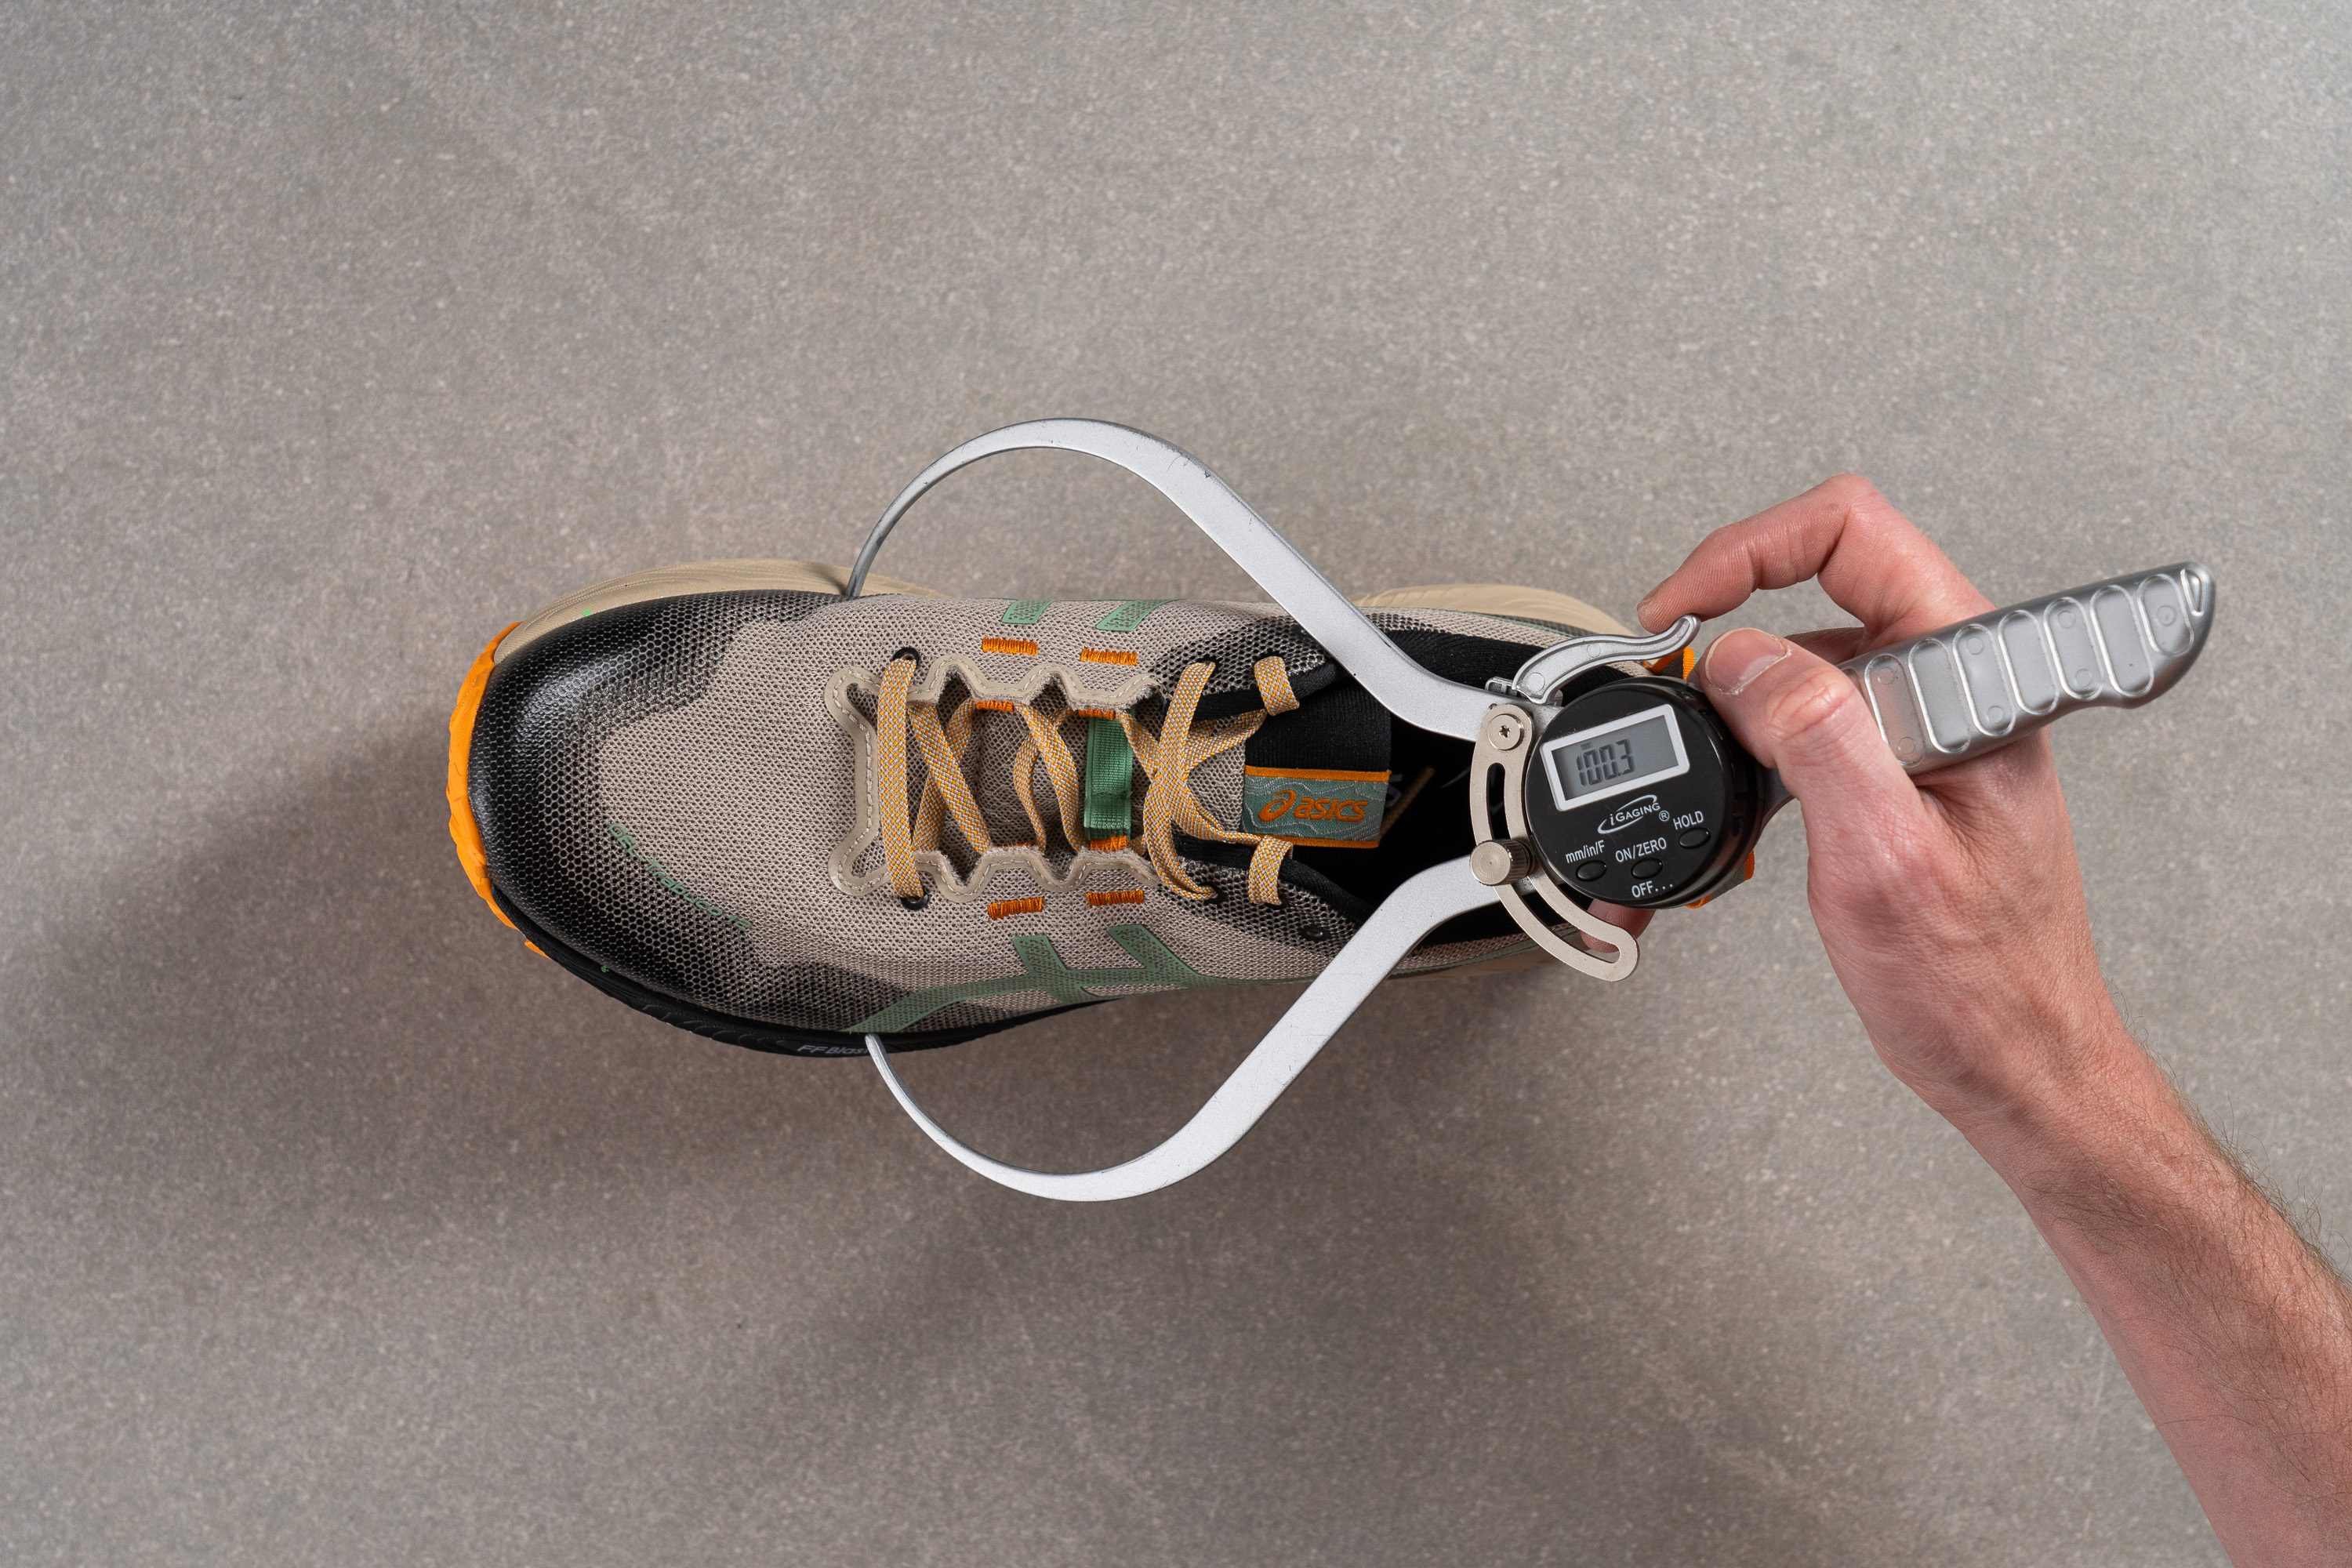 asics Gel zapatillas de running asics Gel trail neutro talla 36 Toebox width at the widest part